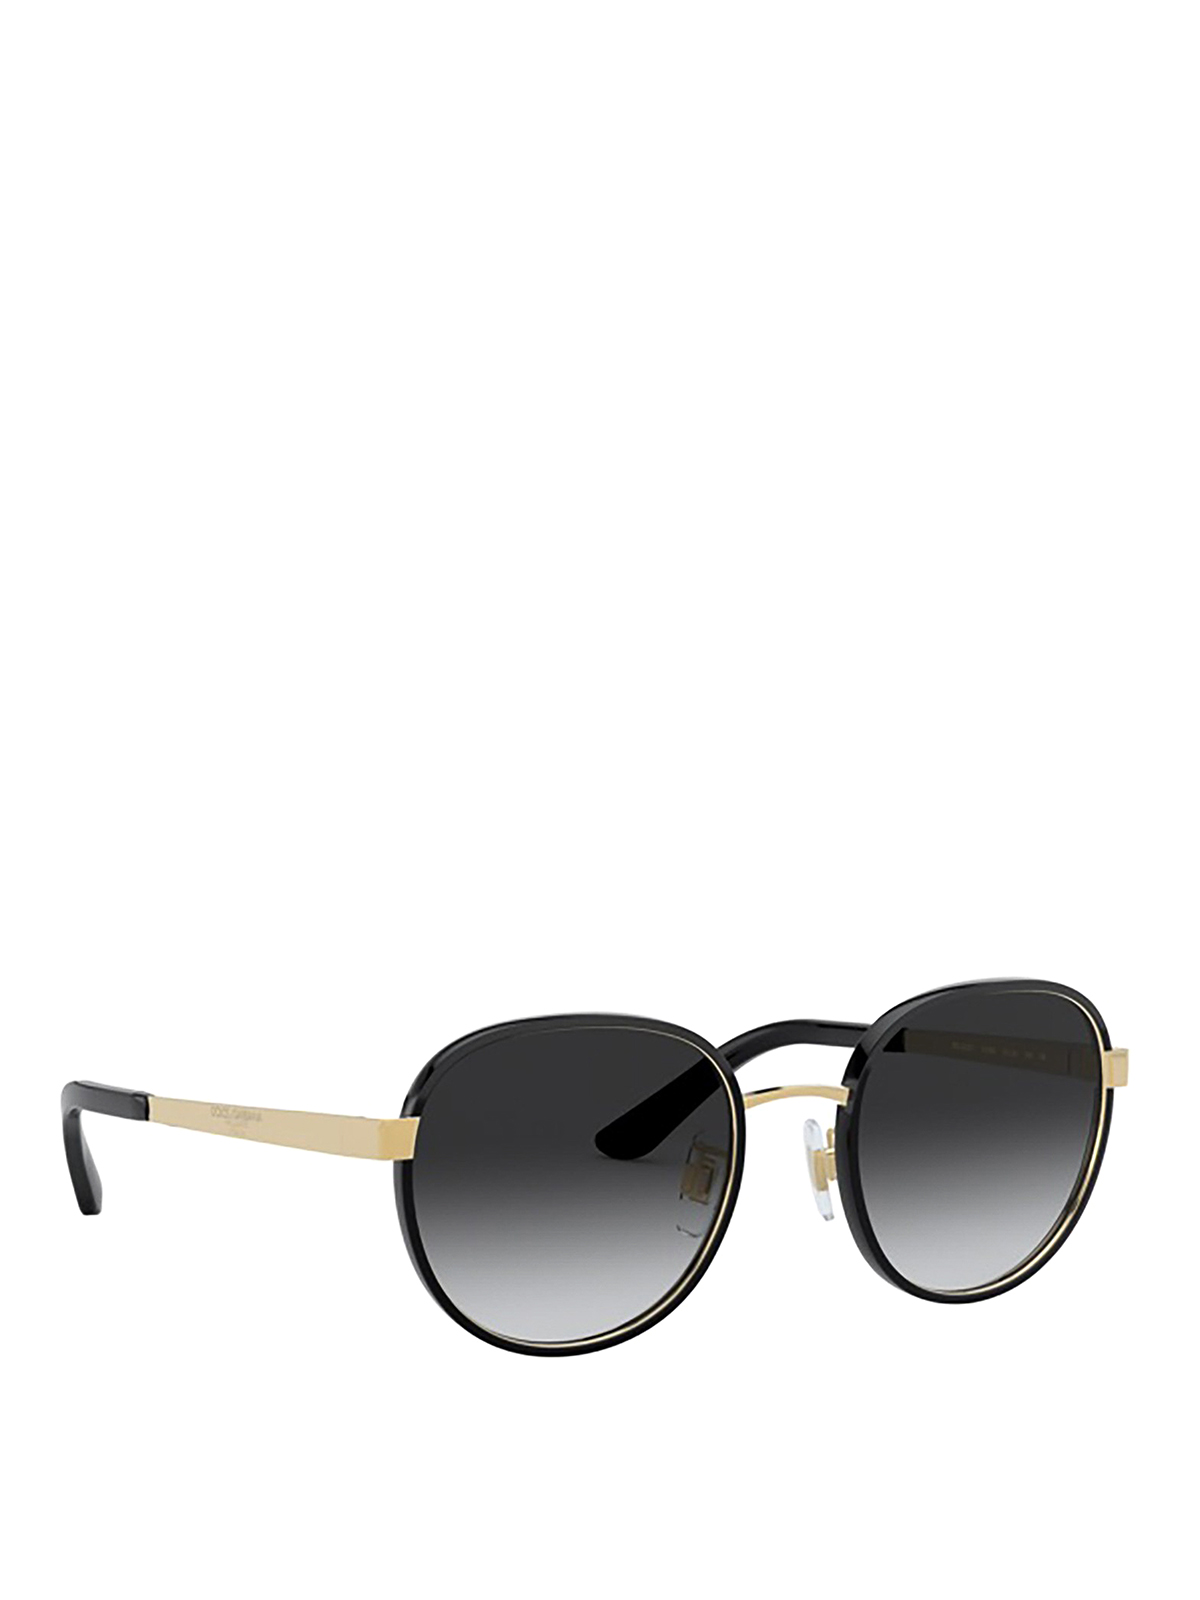 Sunglasses Dolce & Gabbana - Print Family black sunglasses - DG2227J028G